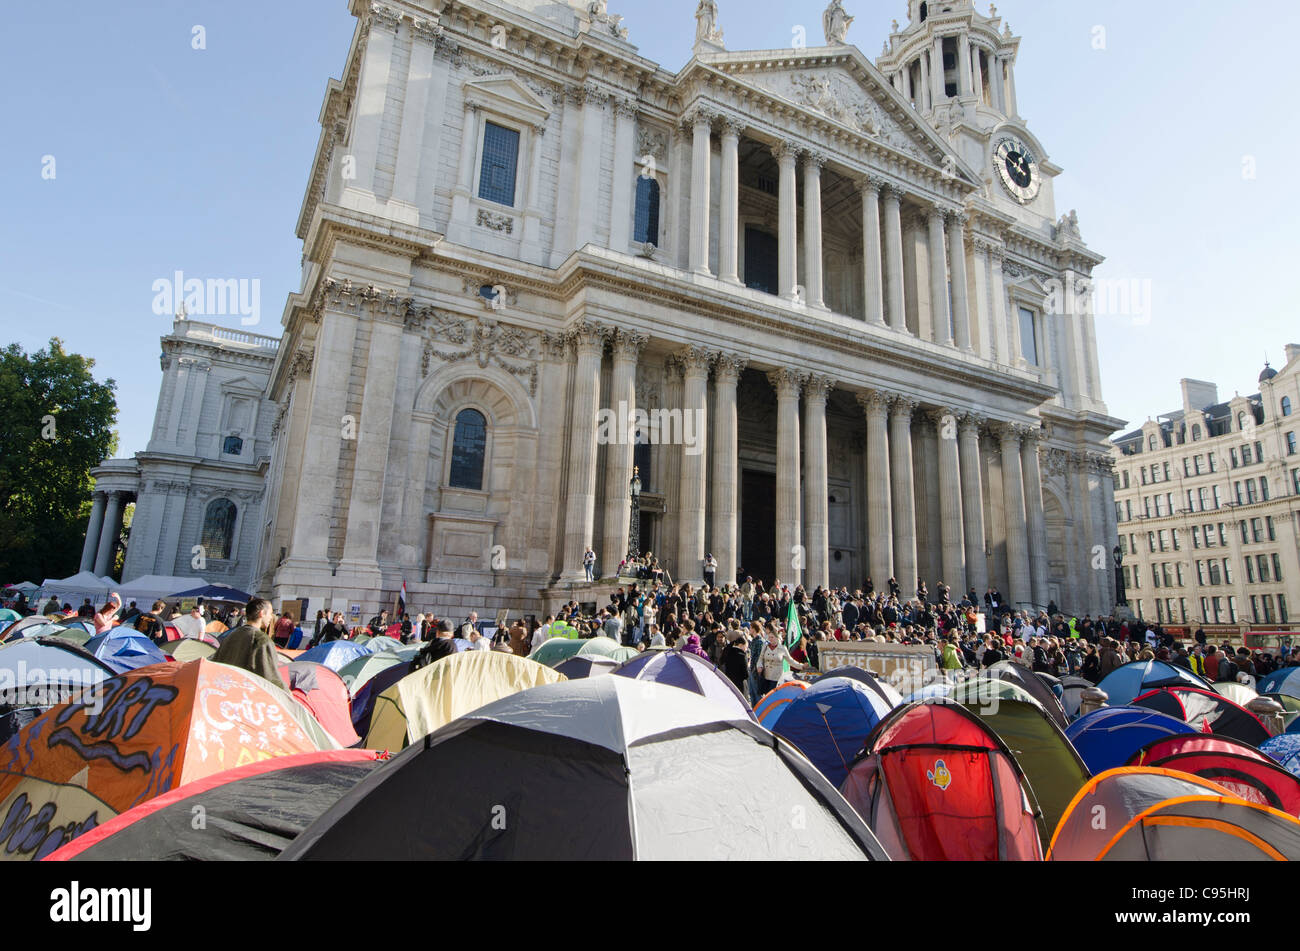 Anti-kapitalistischen Zelt Demonstranten St. Pauls Cathedral, London Uk besetzen Londoner City Stockfoto